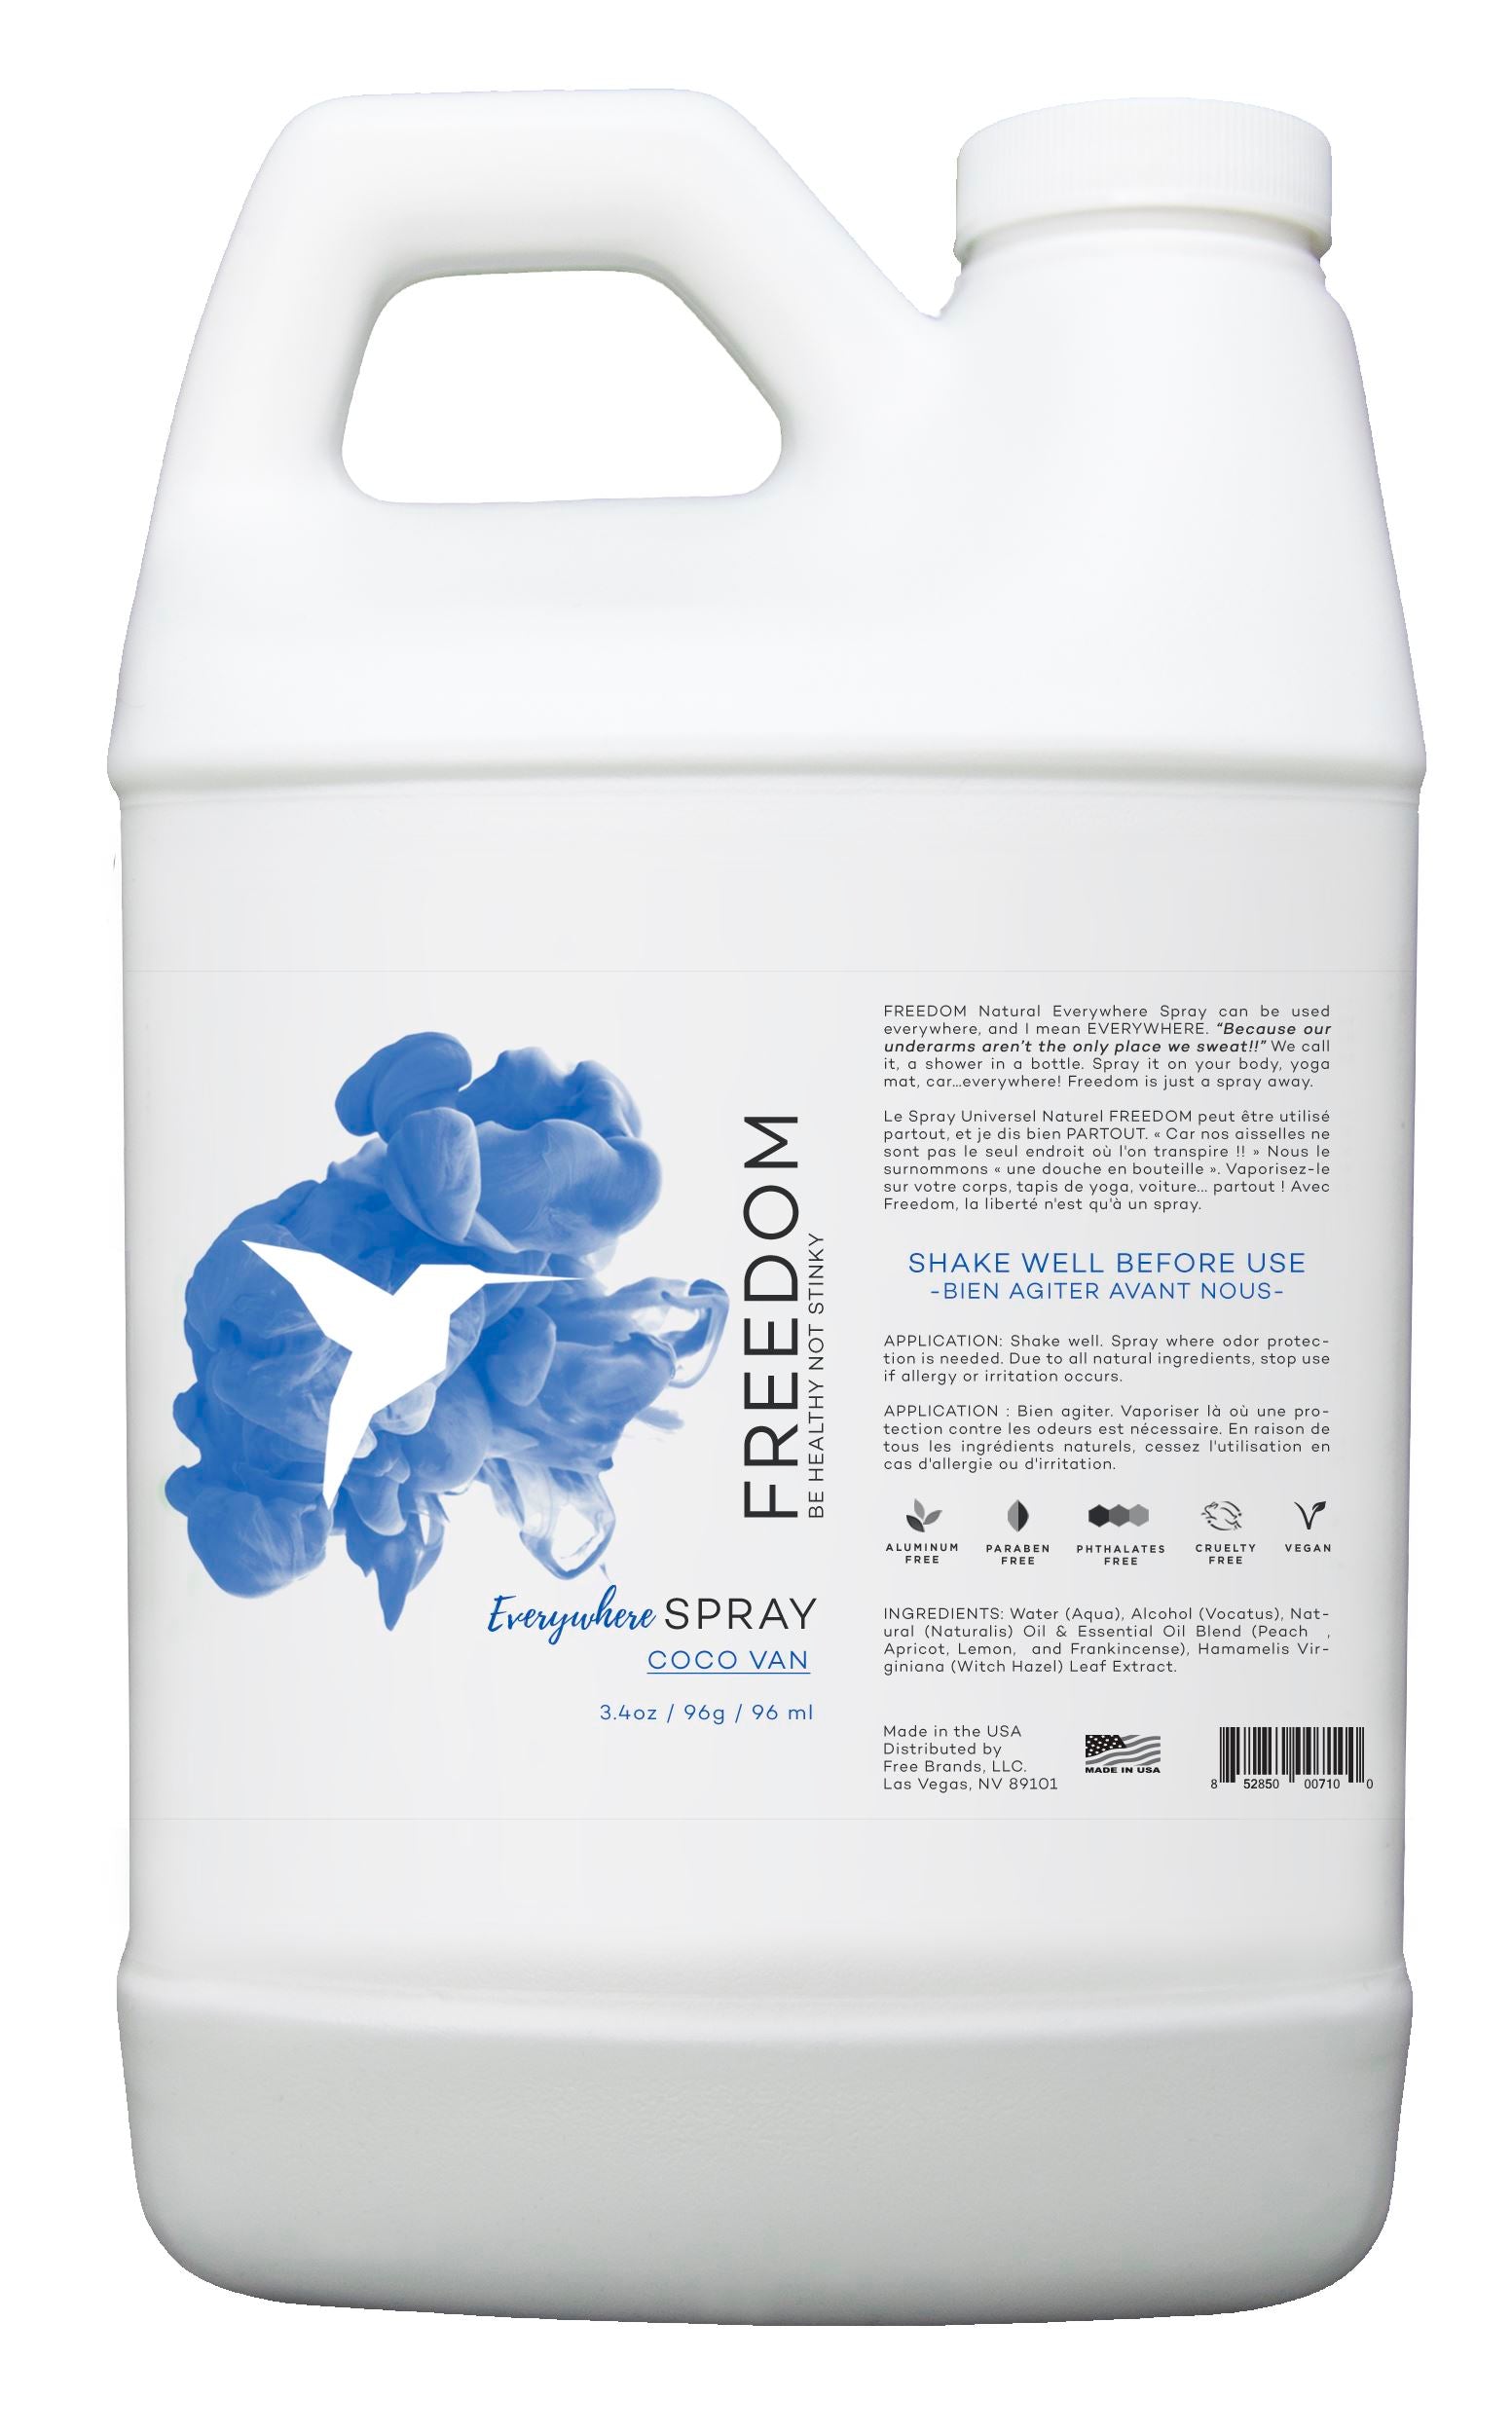 Freedom Natural Deodorant Everywhere Spray Lavender Citrus 3.4oz